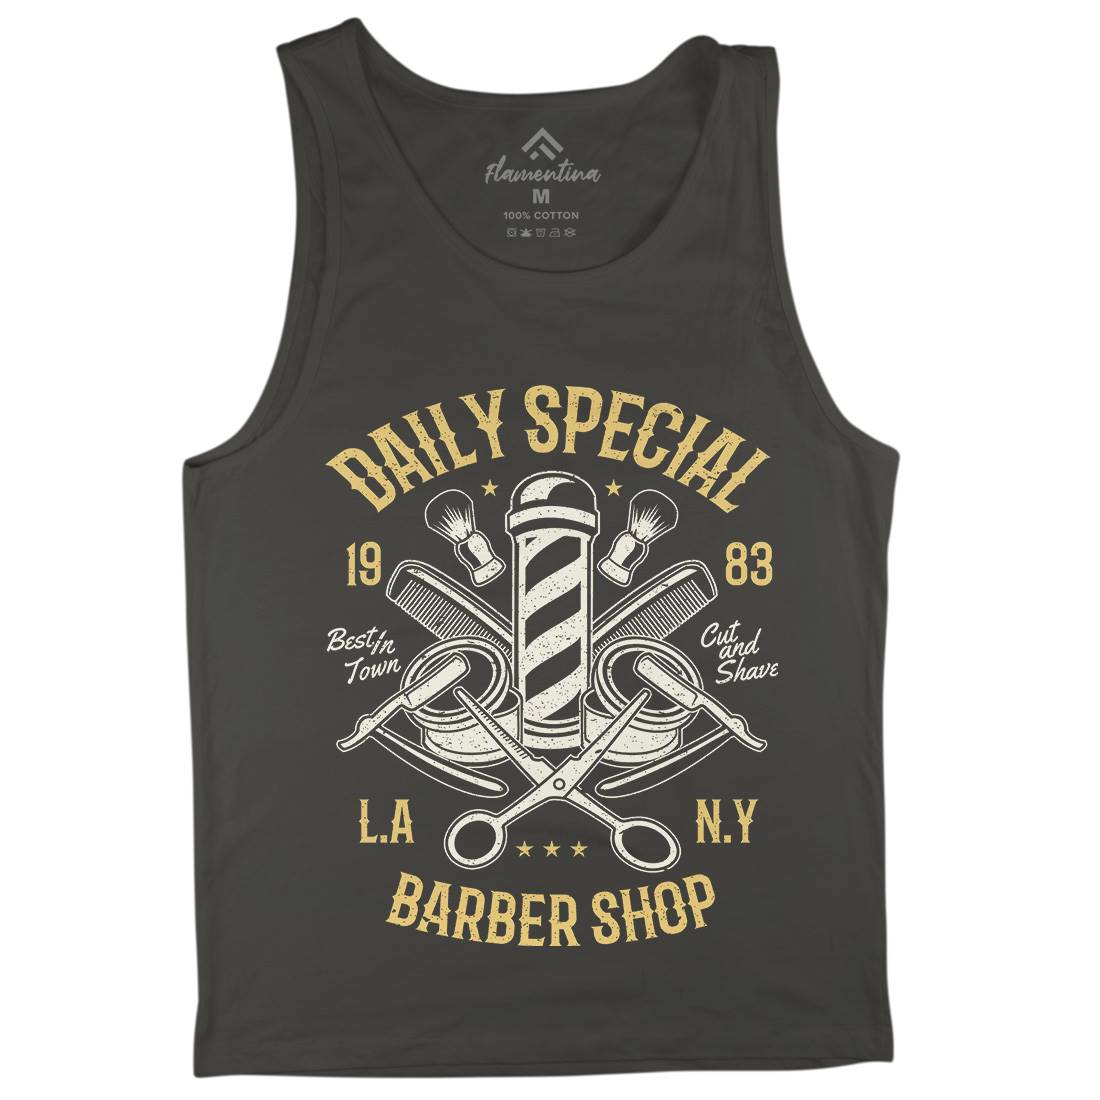 Daily Special Shop Mens Tank Top Vest Barber A041